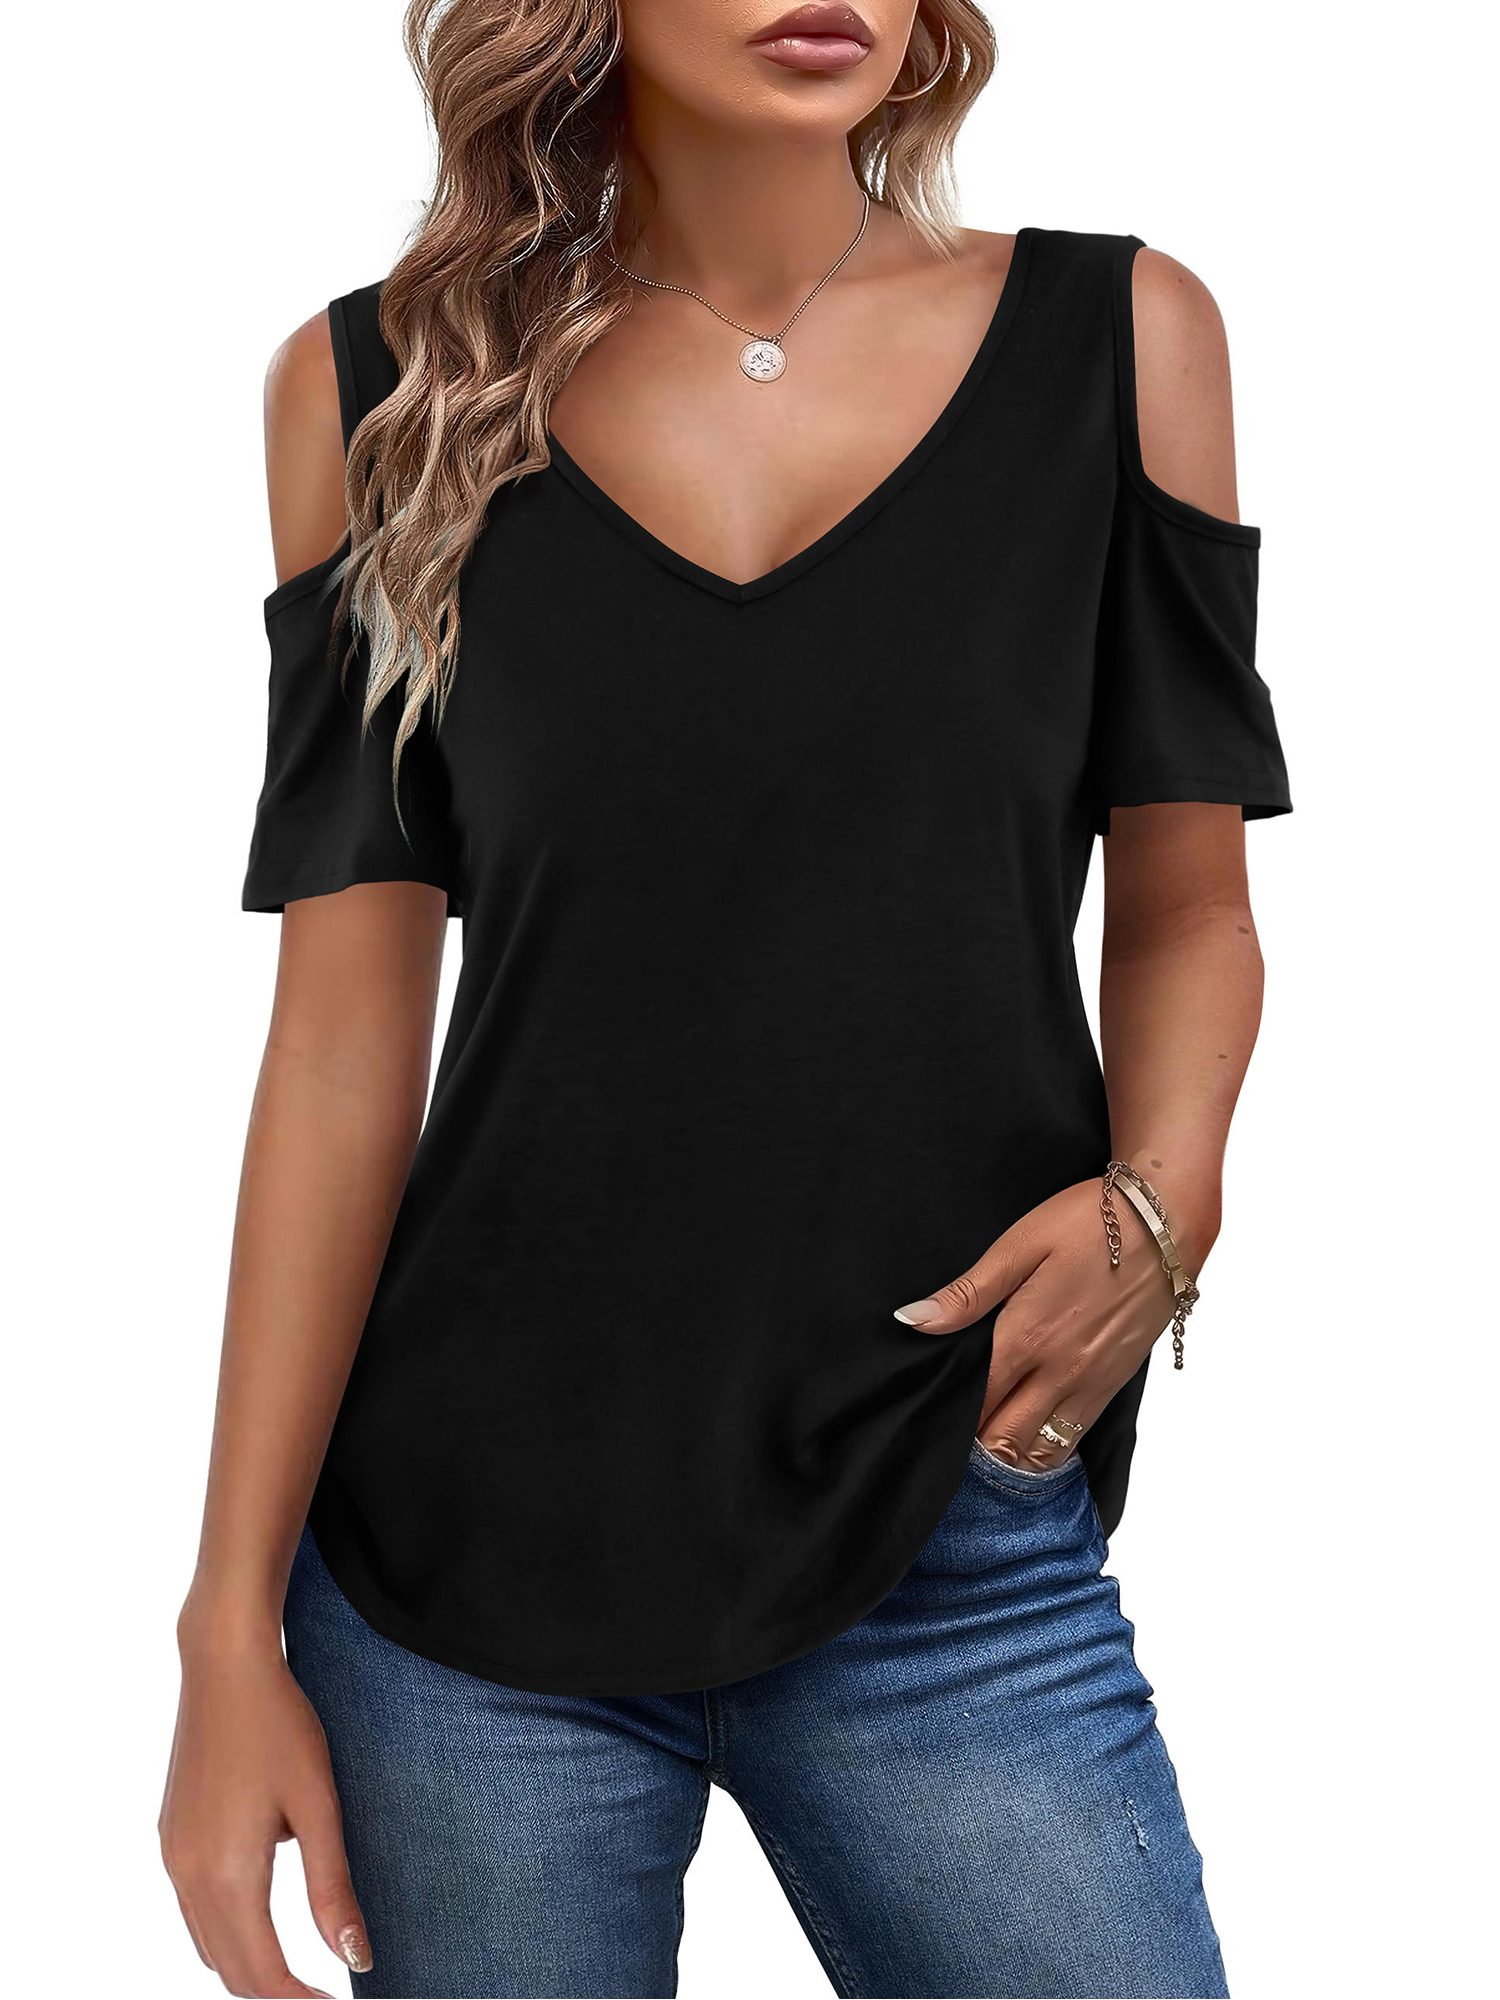 Hanes Women's Short-Sleeve V-Neck Graphic T-Shirt - Walmart.com